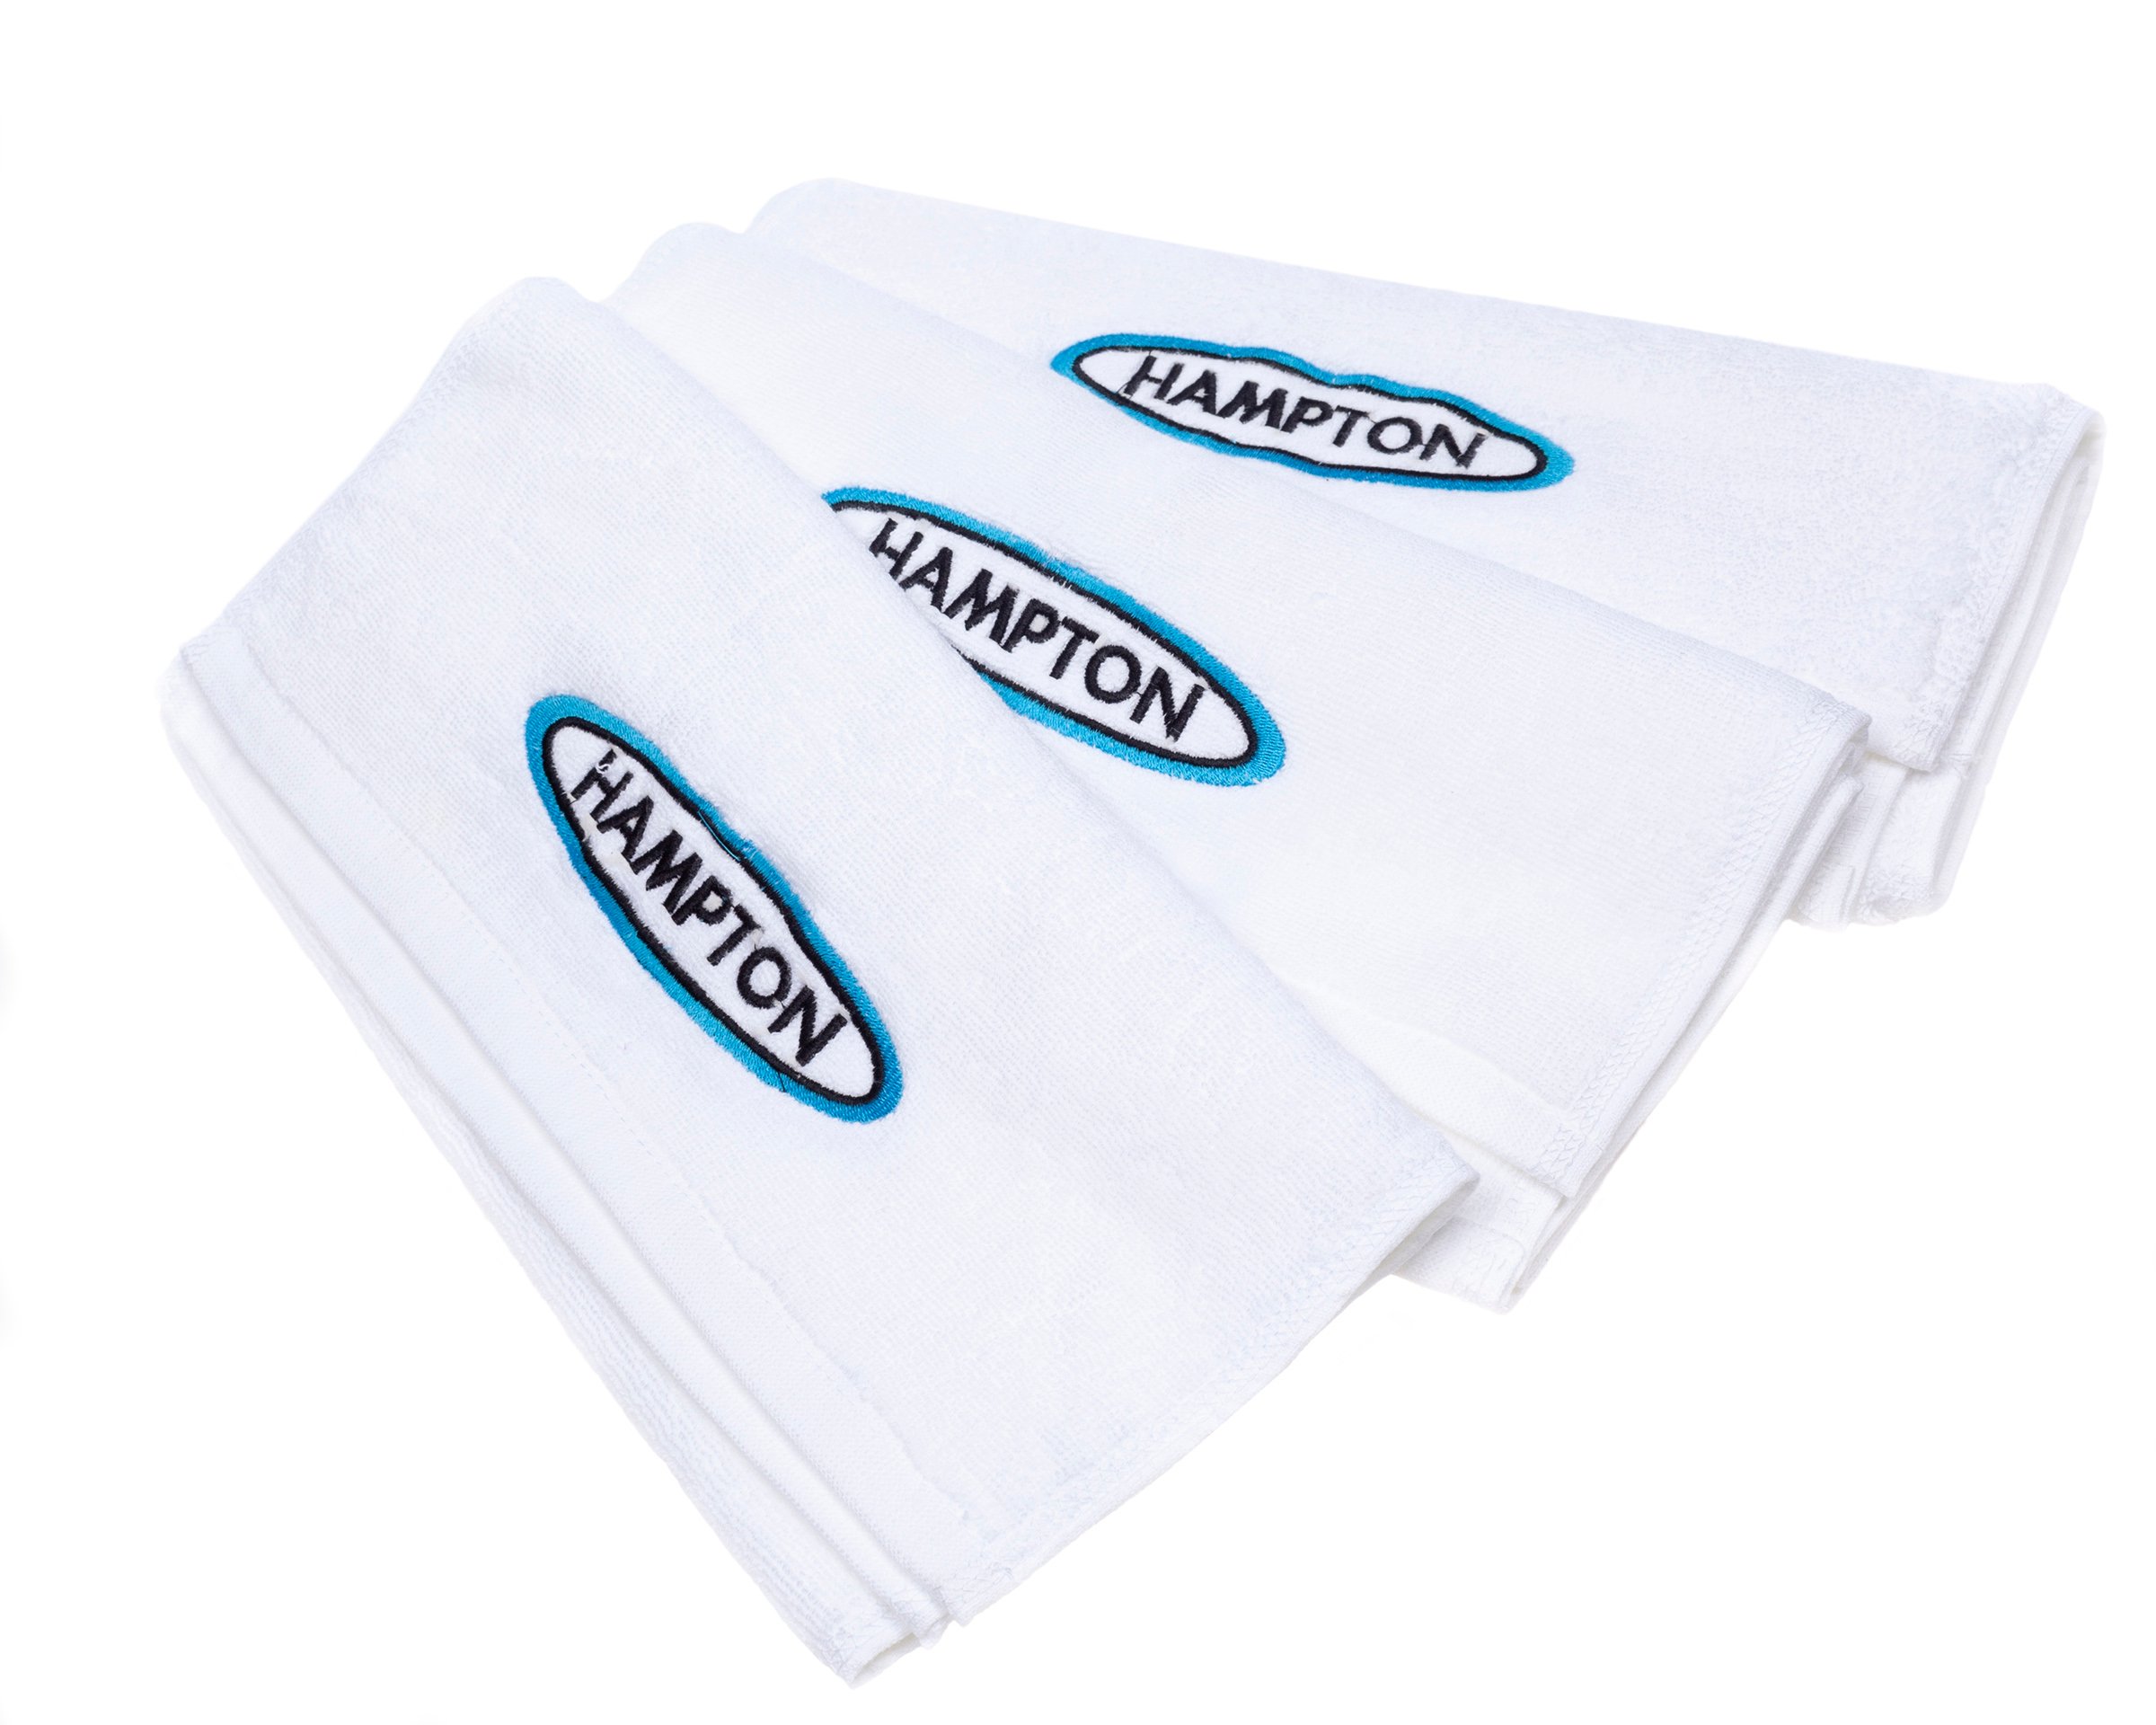 https://www.hamptonfit.com/wp-content/uploads/2019/12/HF-towels-1.jpg